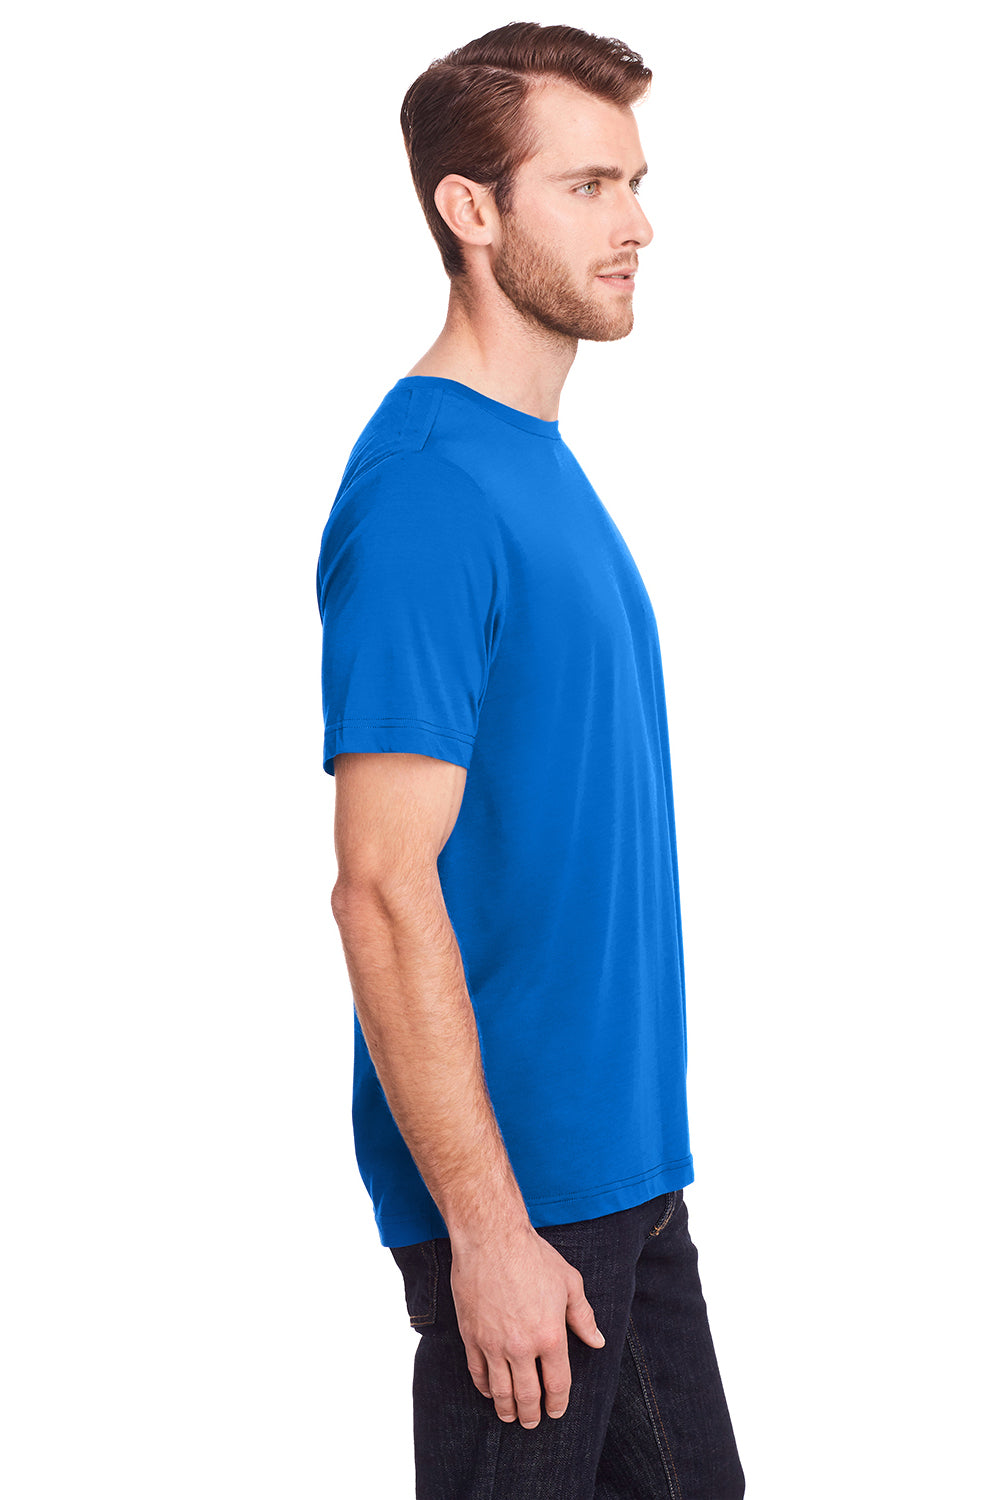 Core 365 CE111 Mens Fusion ChromaSoft Performance Moisture Wicking Short Sleeve Crewneck T-Shirt Royal Blue Side